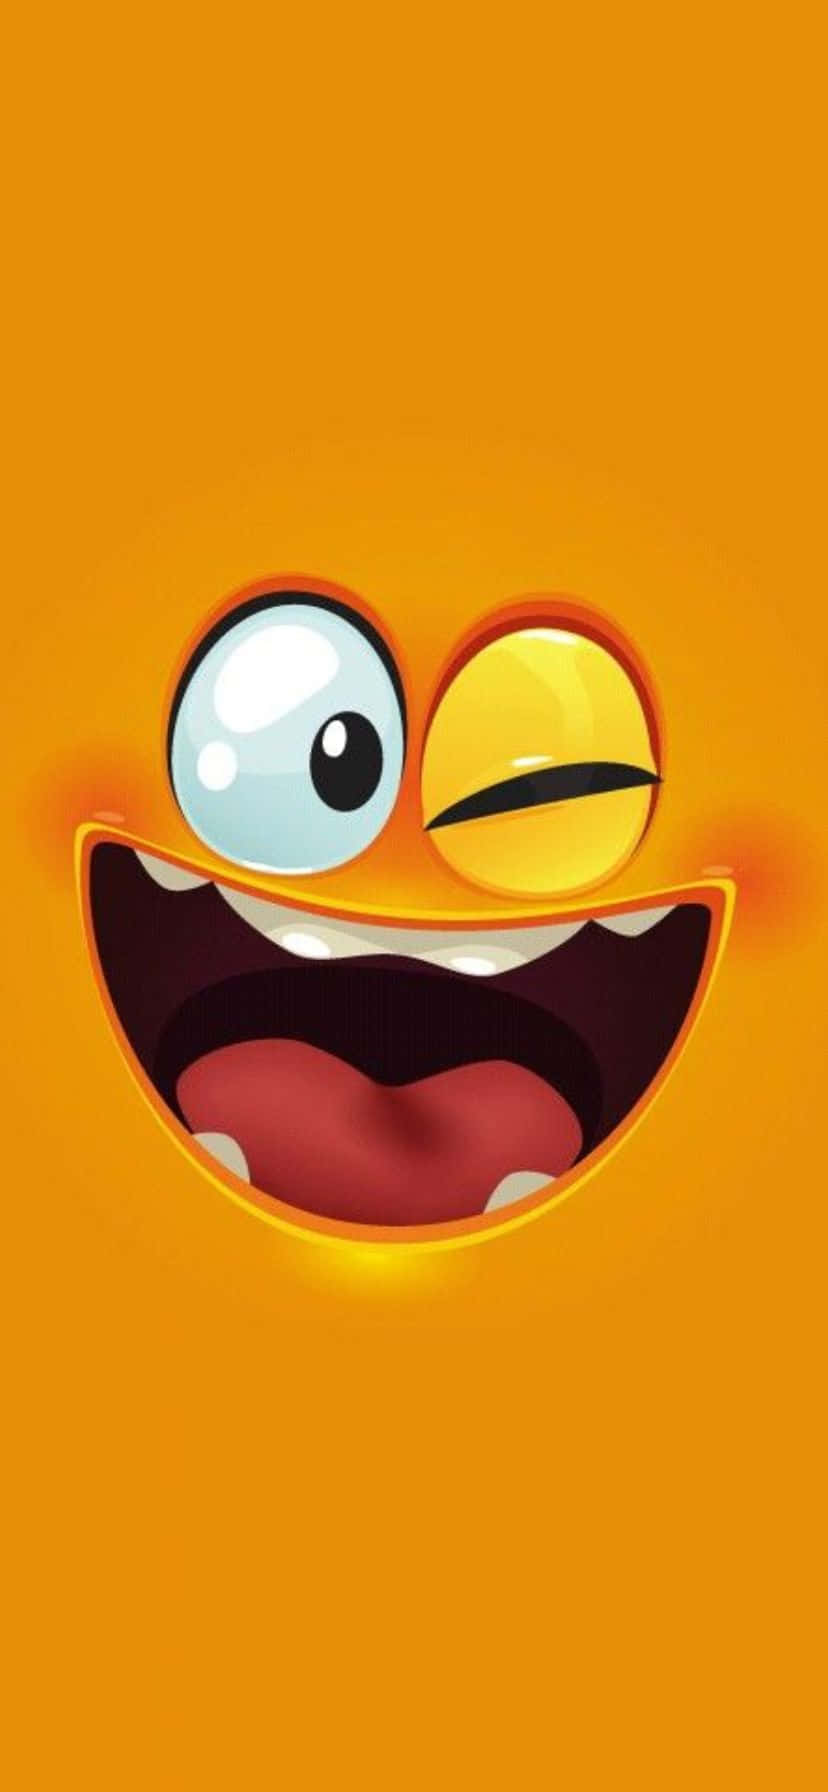 Laughing_ Emoji_with_ One_ Big_ Eye_and_ One_ Small_ Eye.jpg Wallpaper